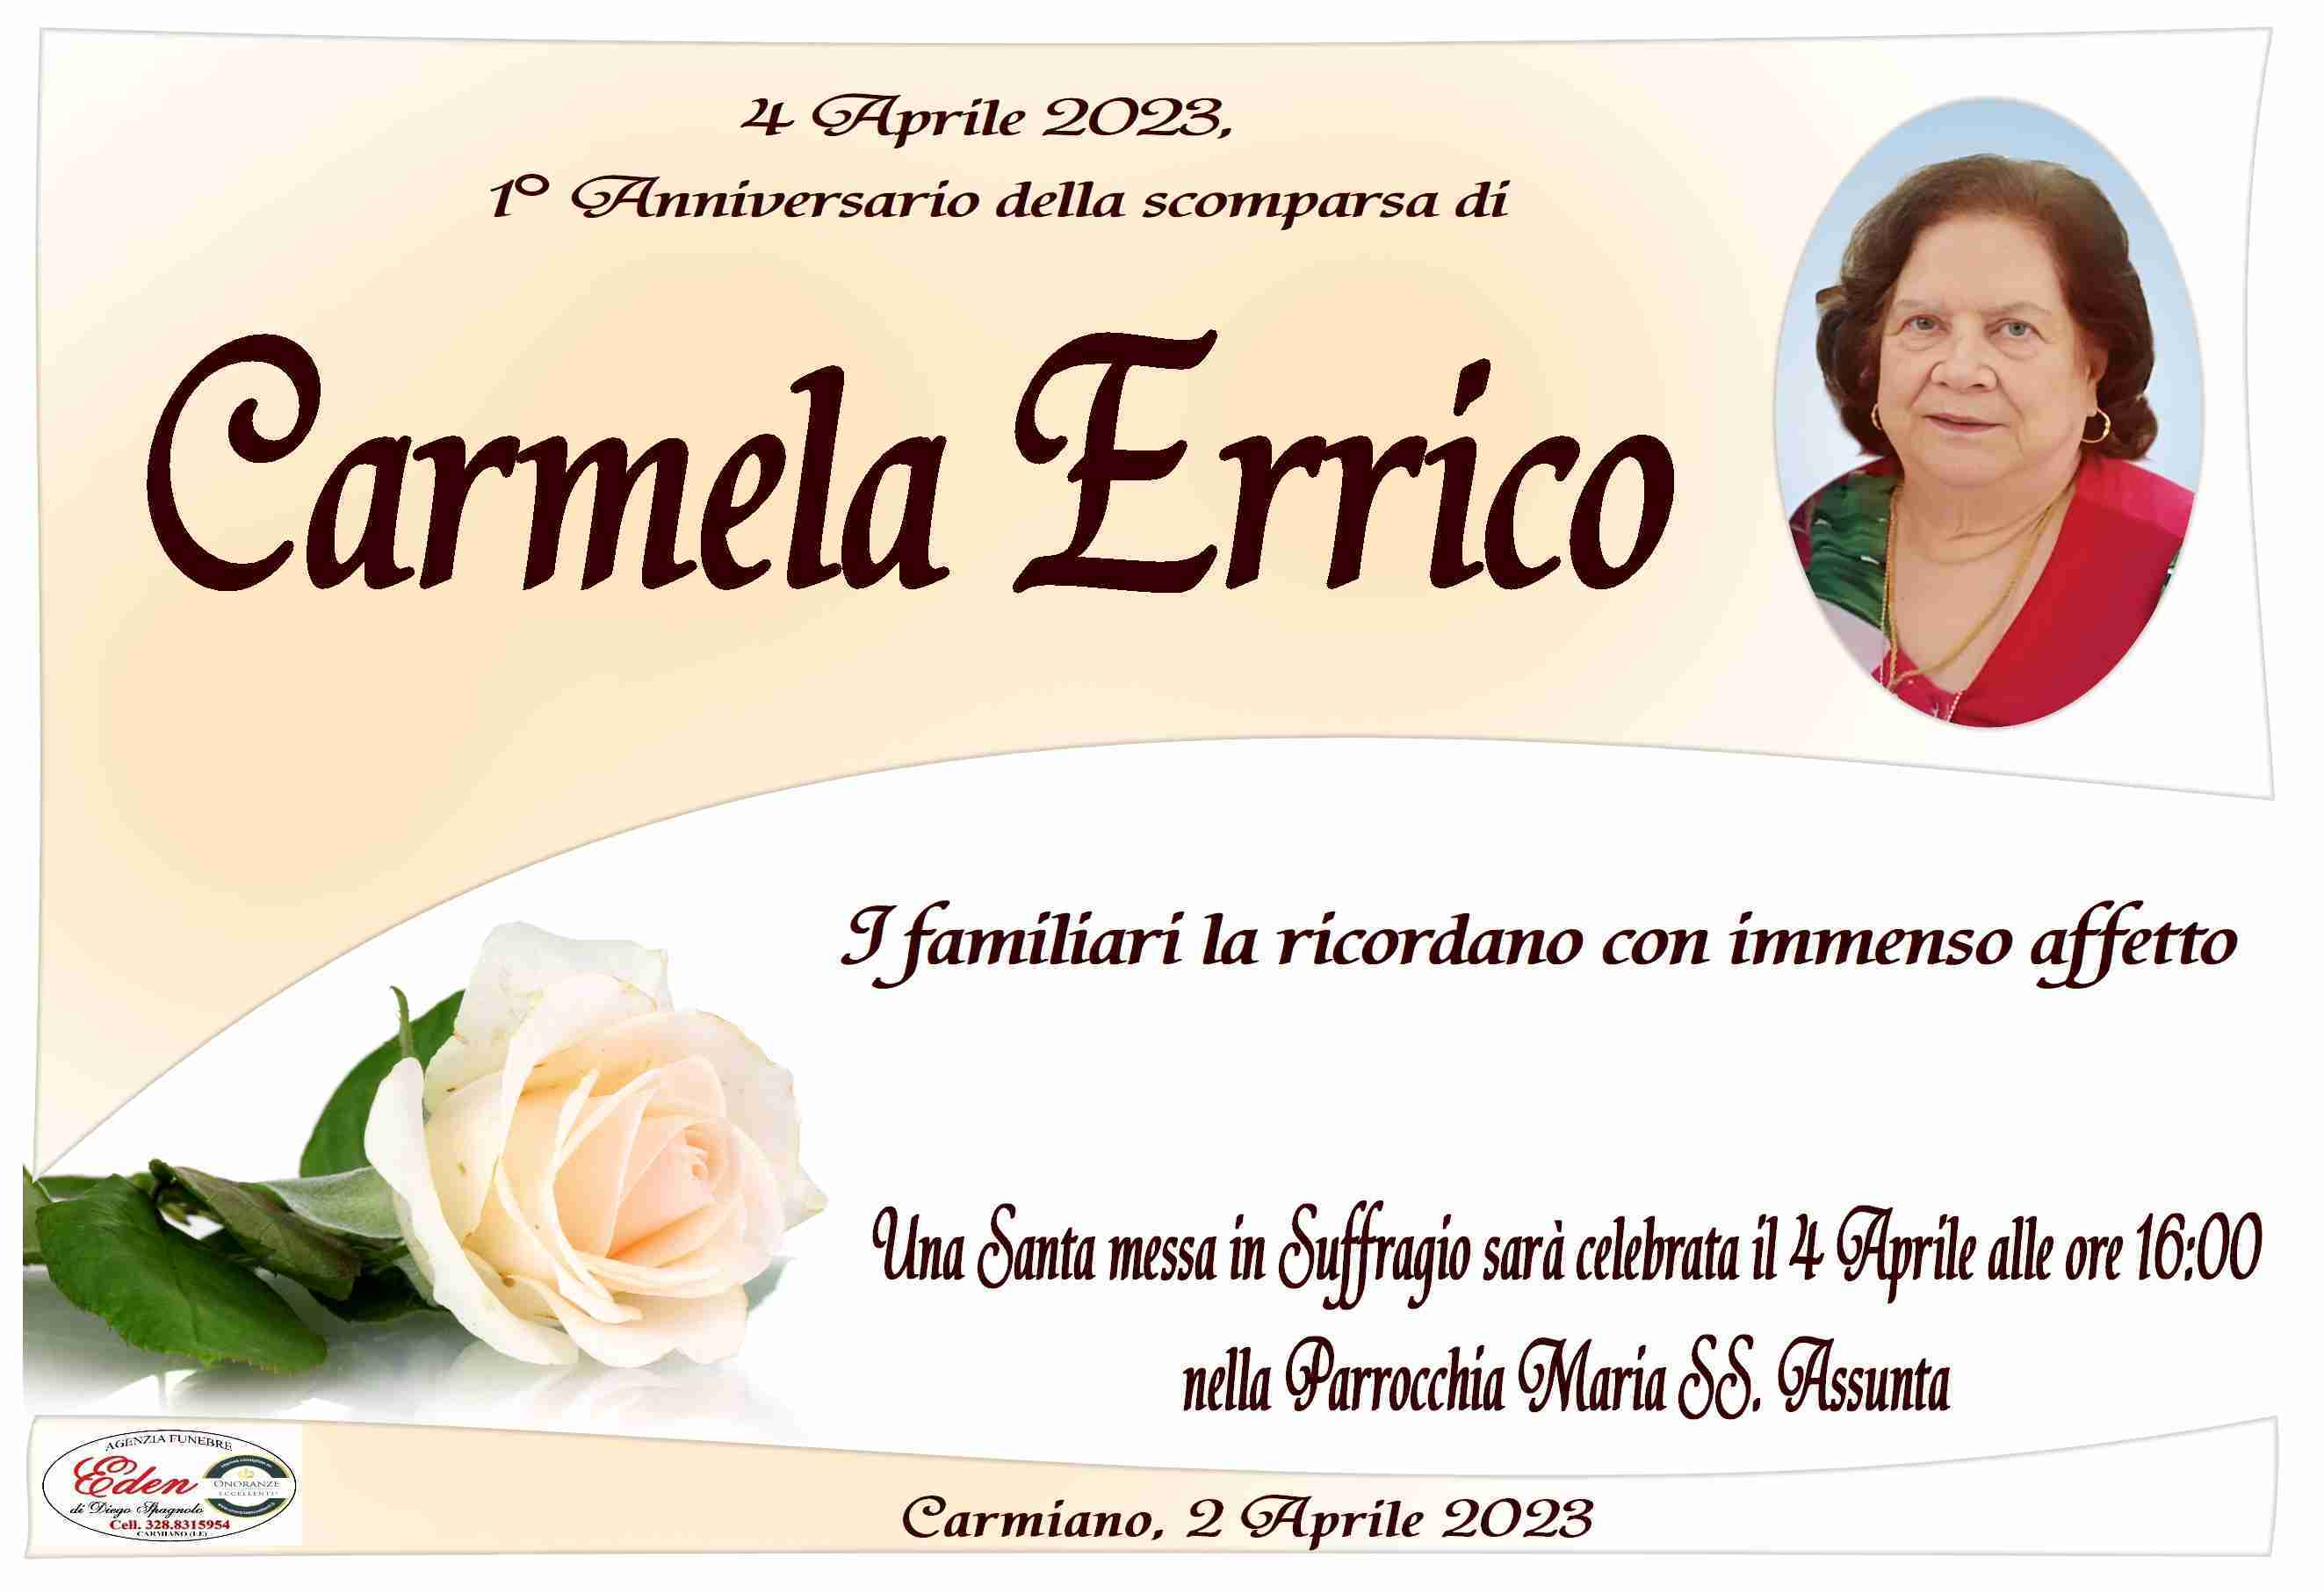 Carmela Errico